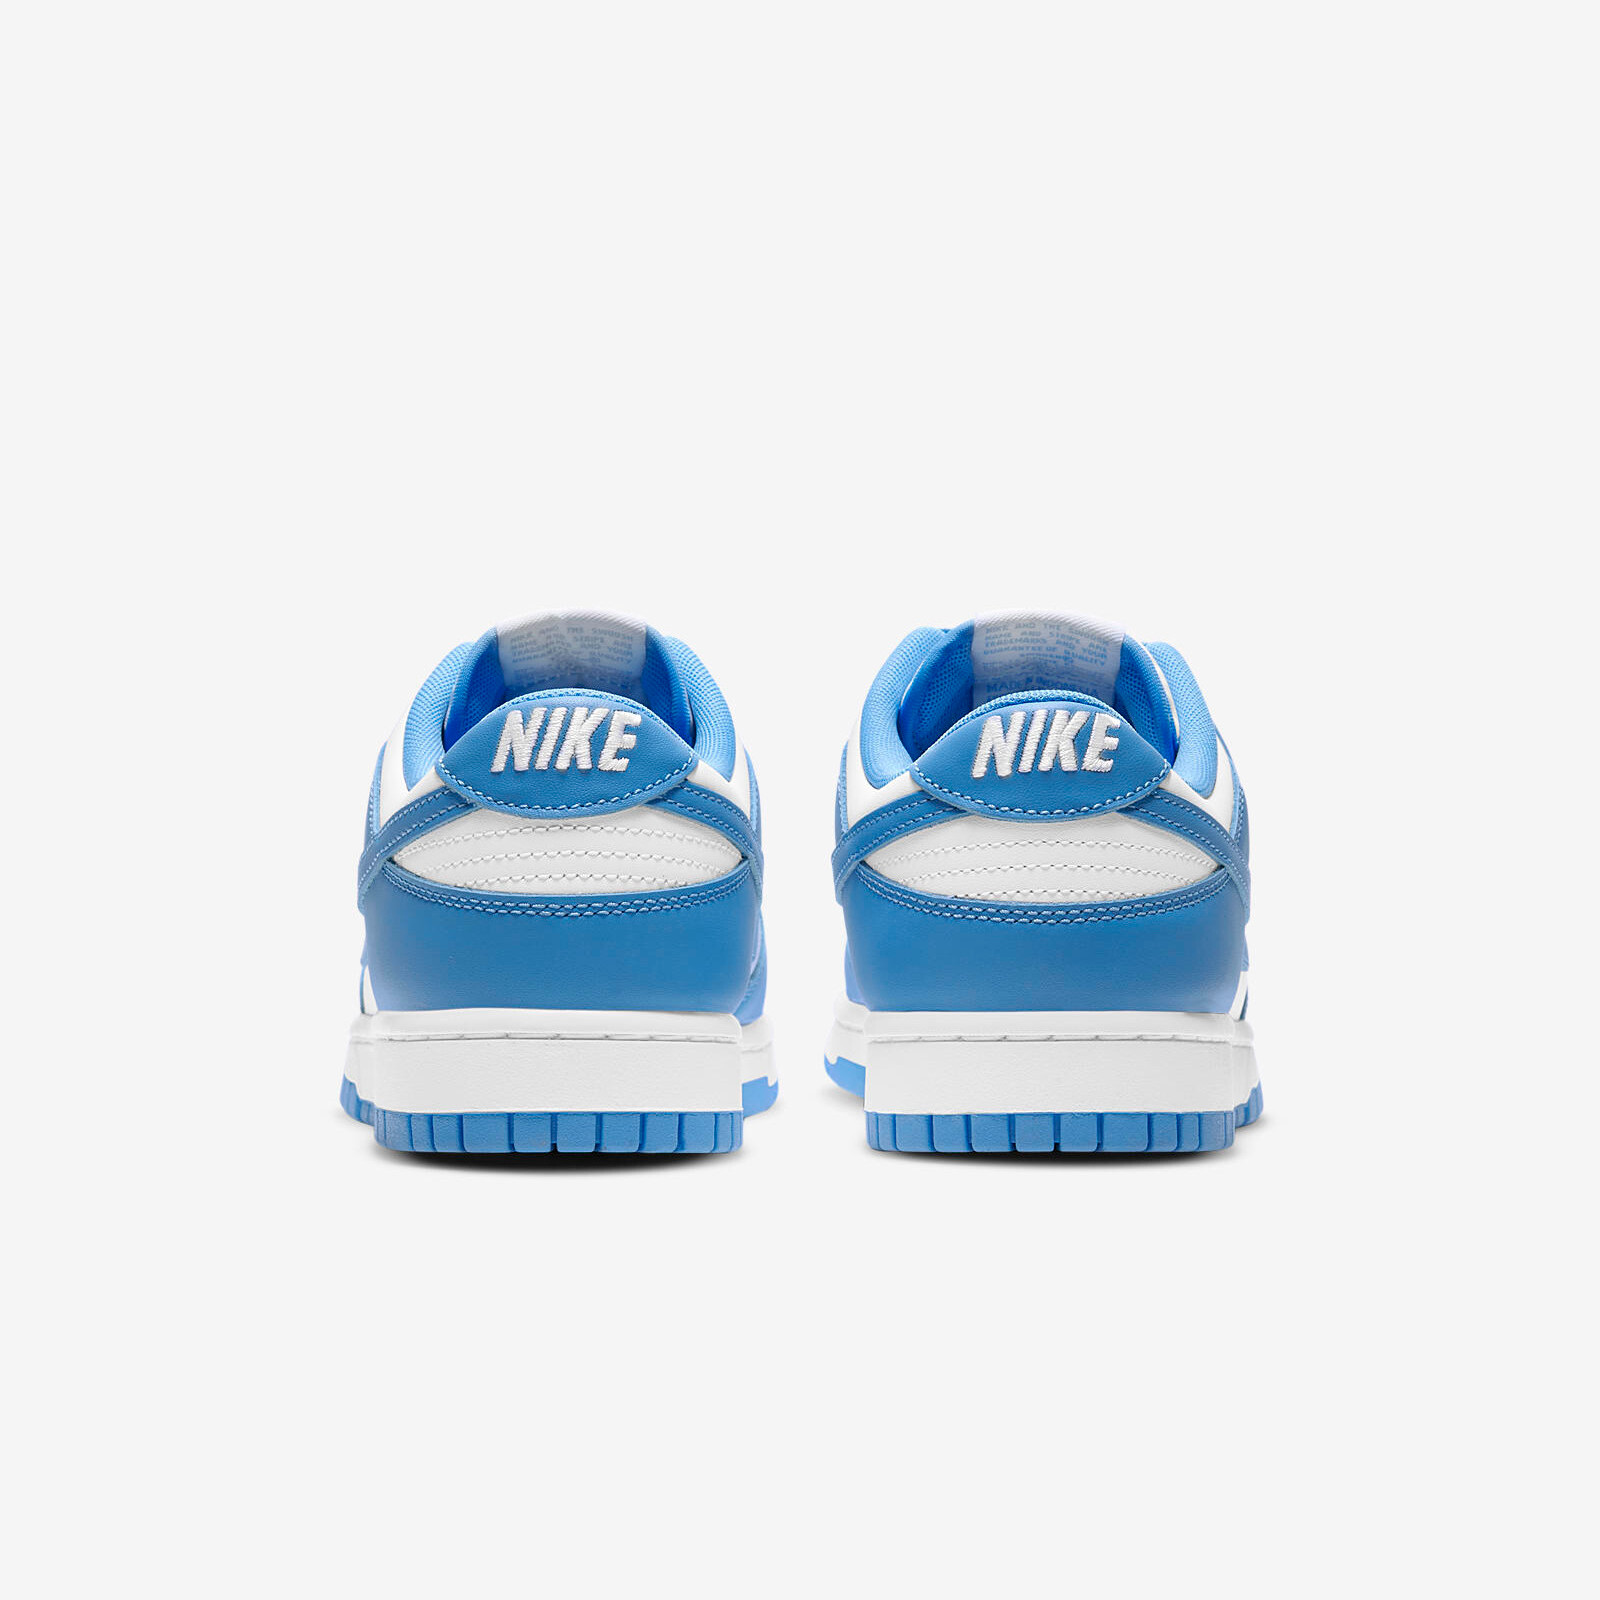 Nike Dunk Low
« University Blue »